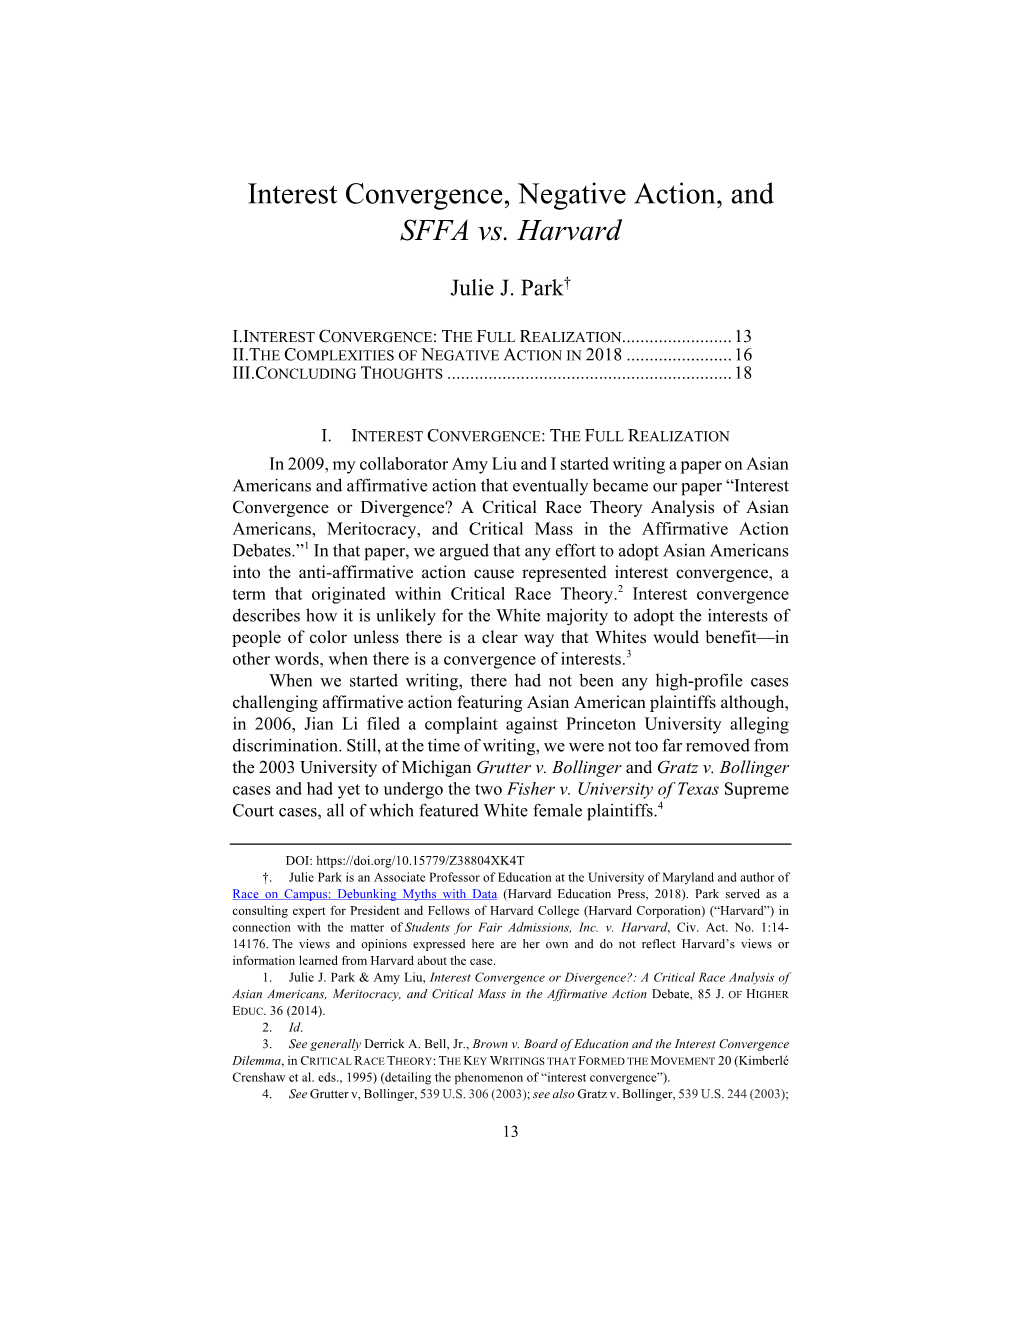 Interest Convergence, Negative Action, and SFFA Vs. Harvard